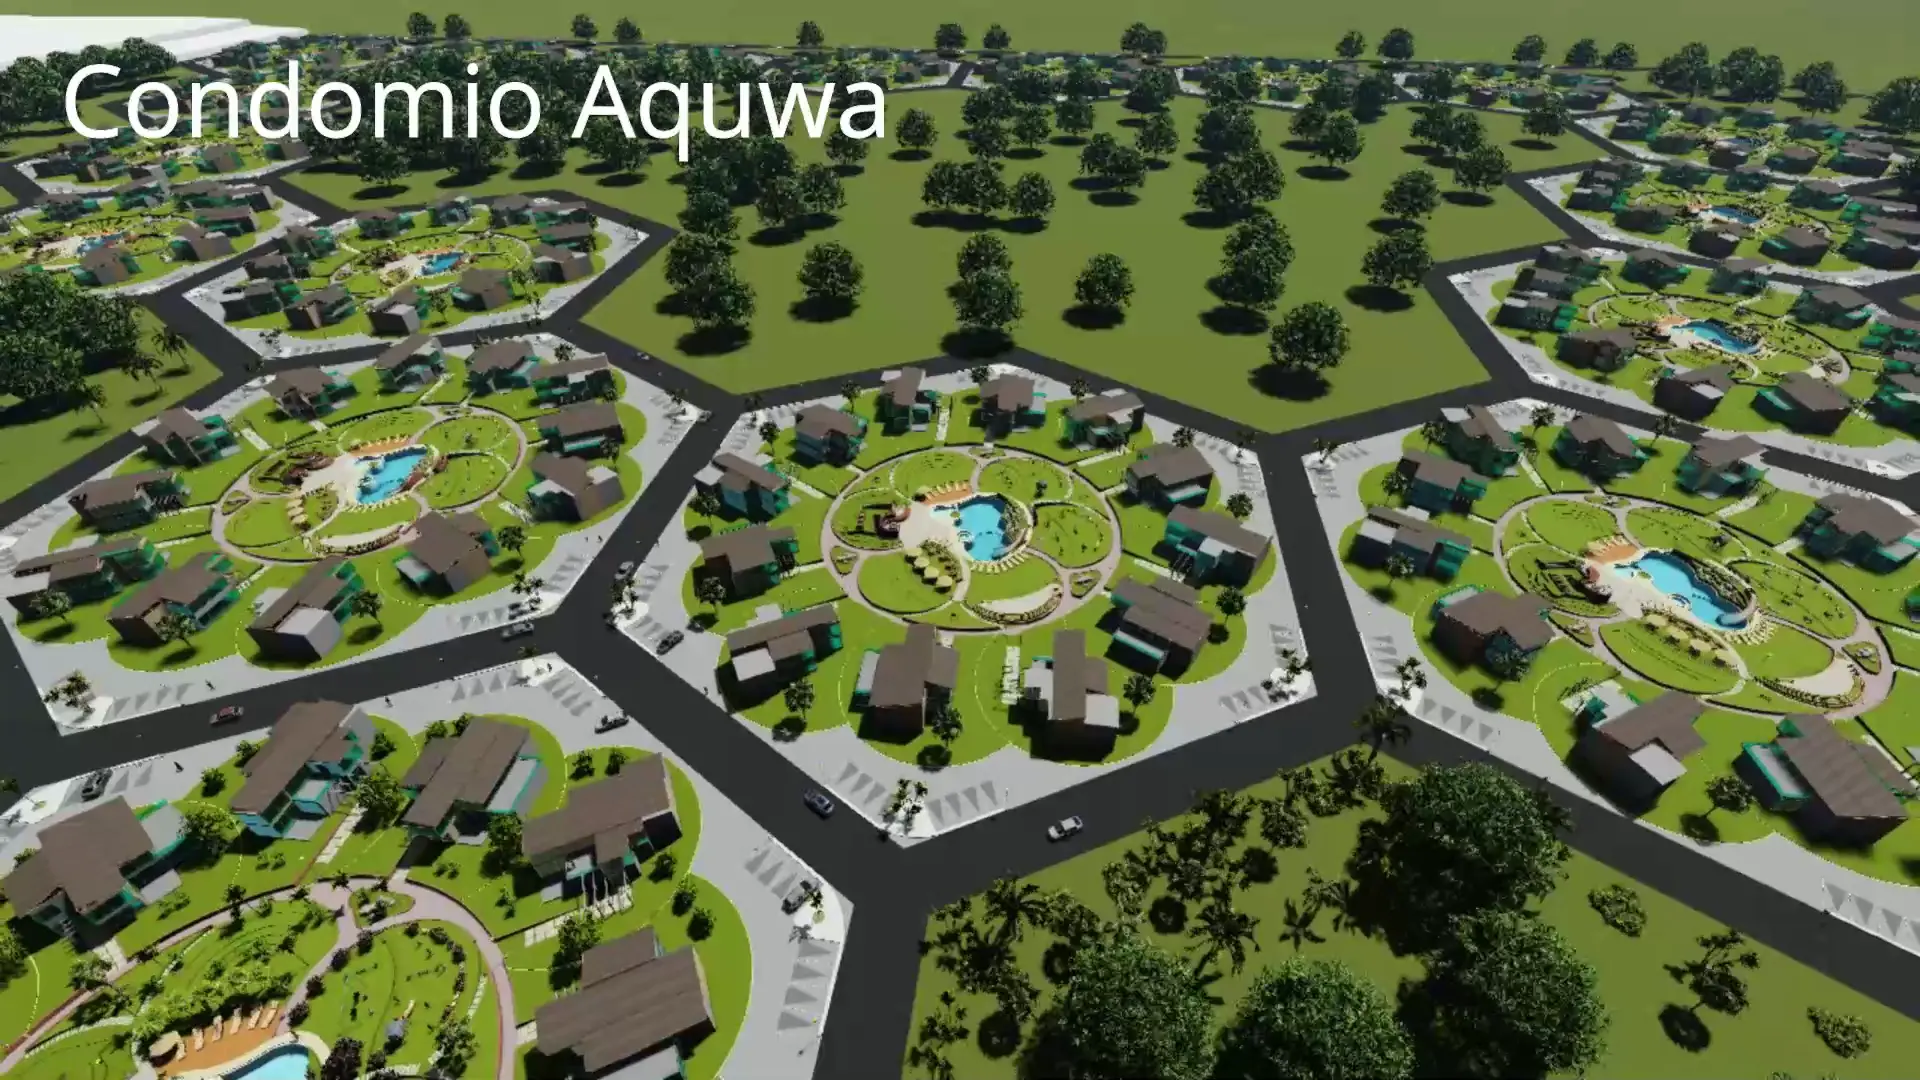 Aquwa Condominio - Josmey